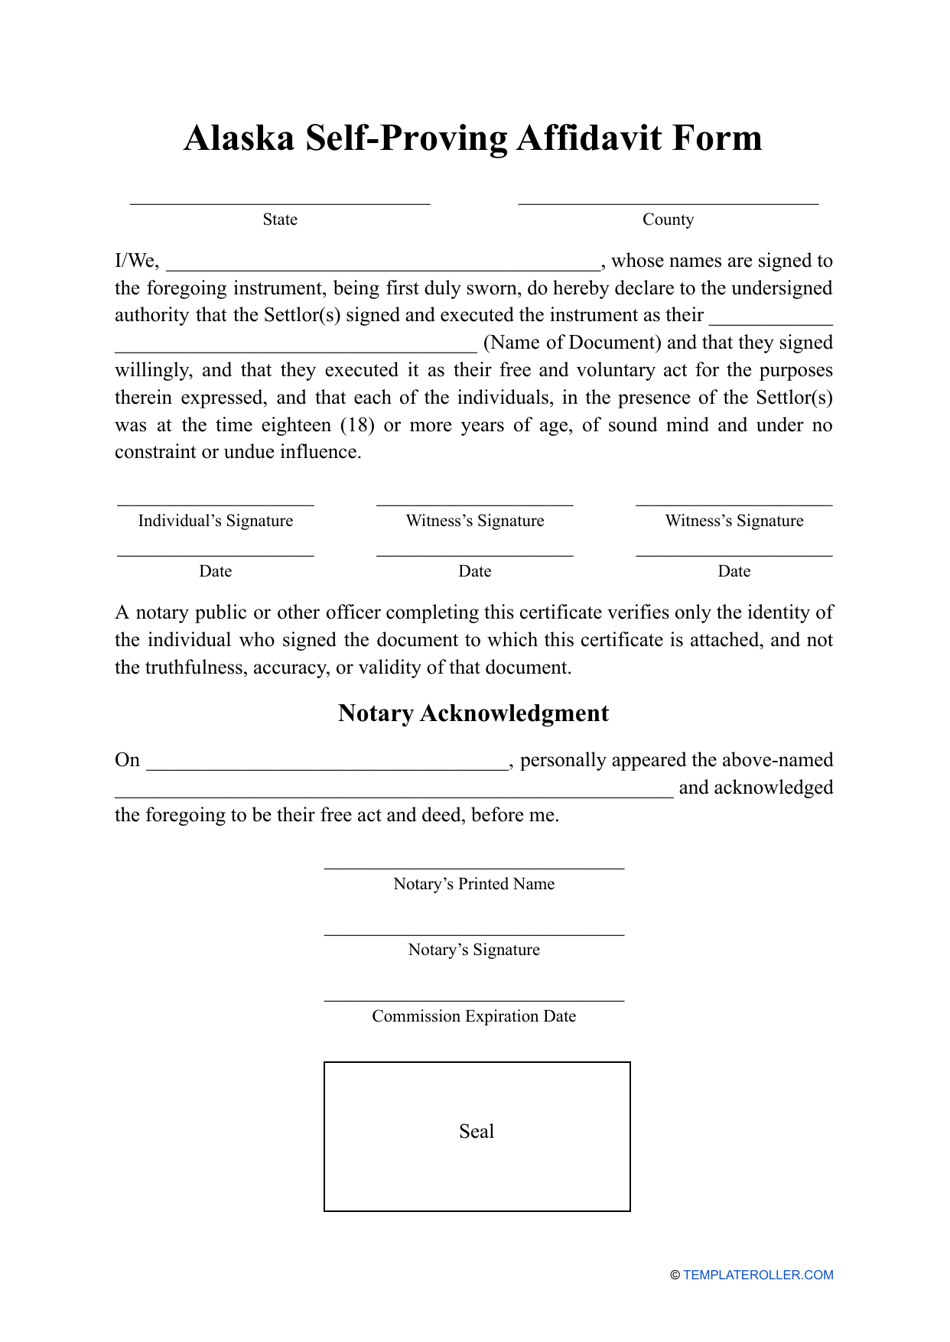 Self-proving Affidavit Form - Alaska, Page 1